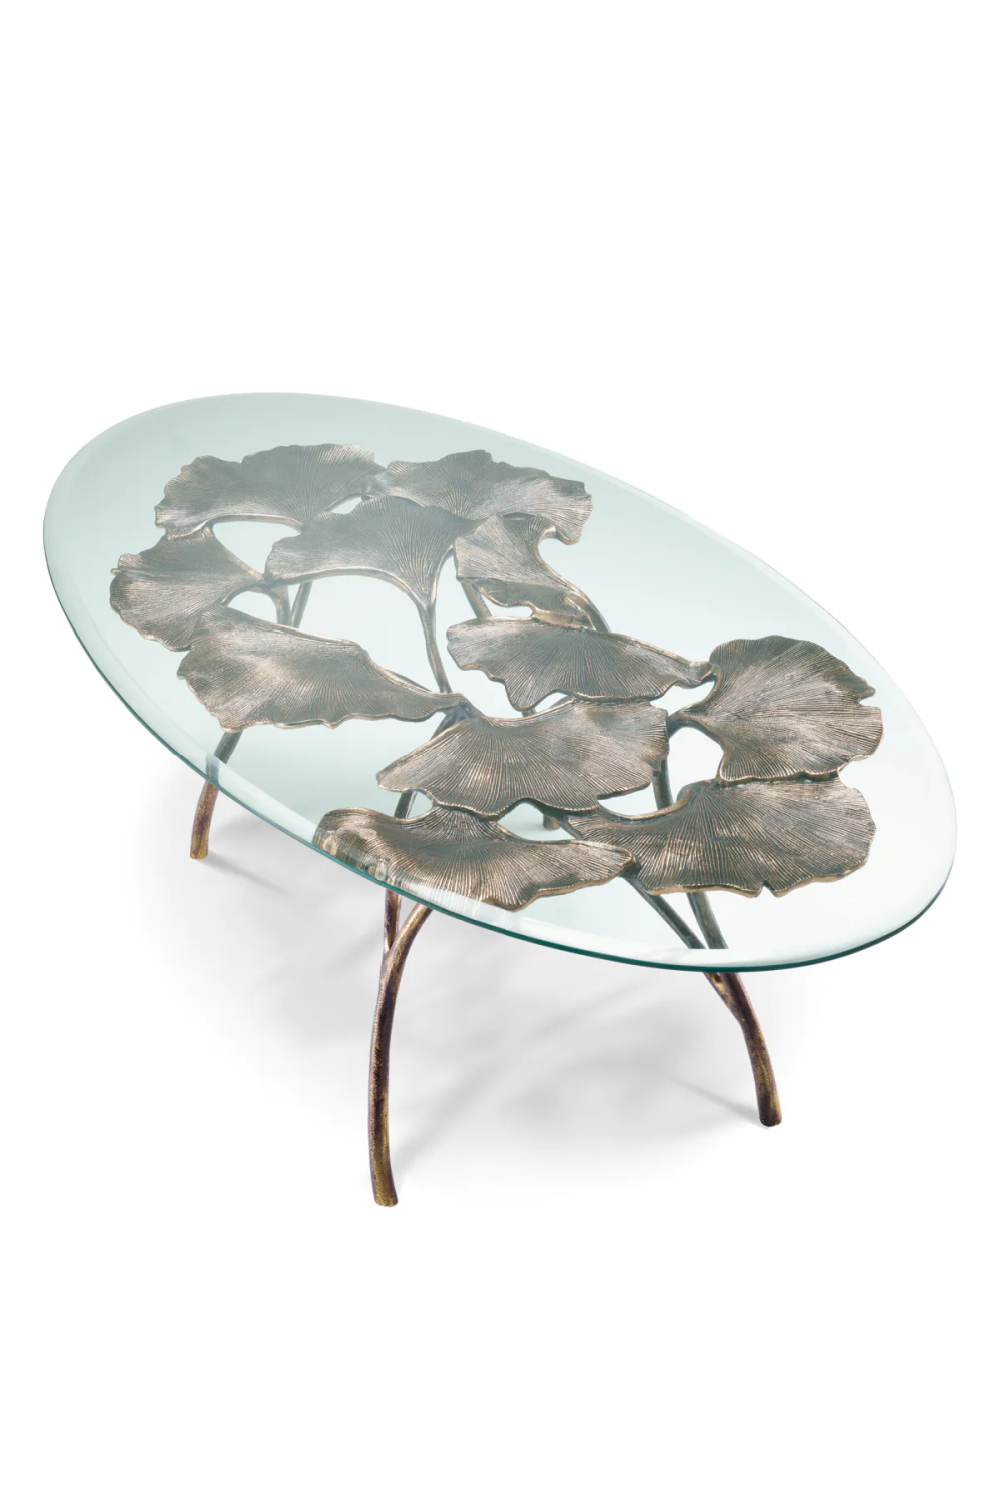 Oval Glass Coffee Table | Eichholtz Poseidon | Oroa.com